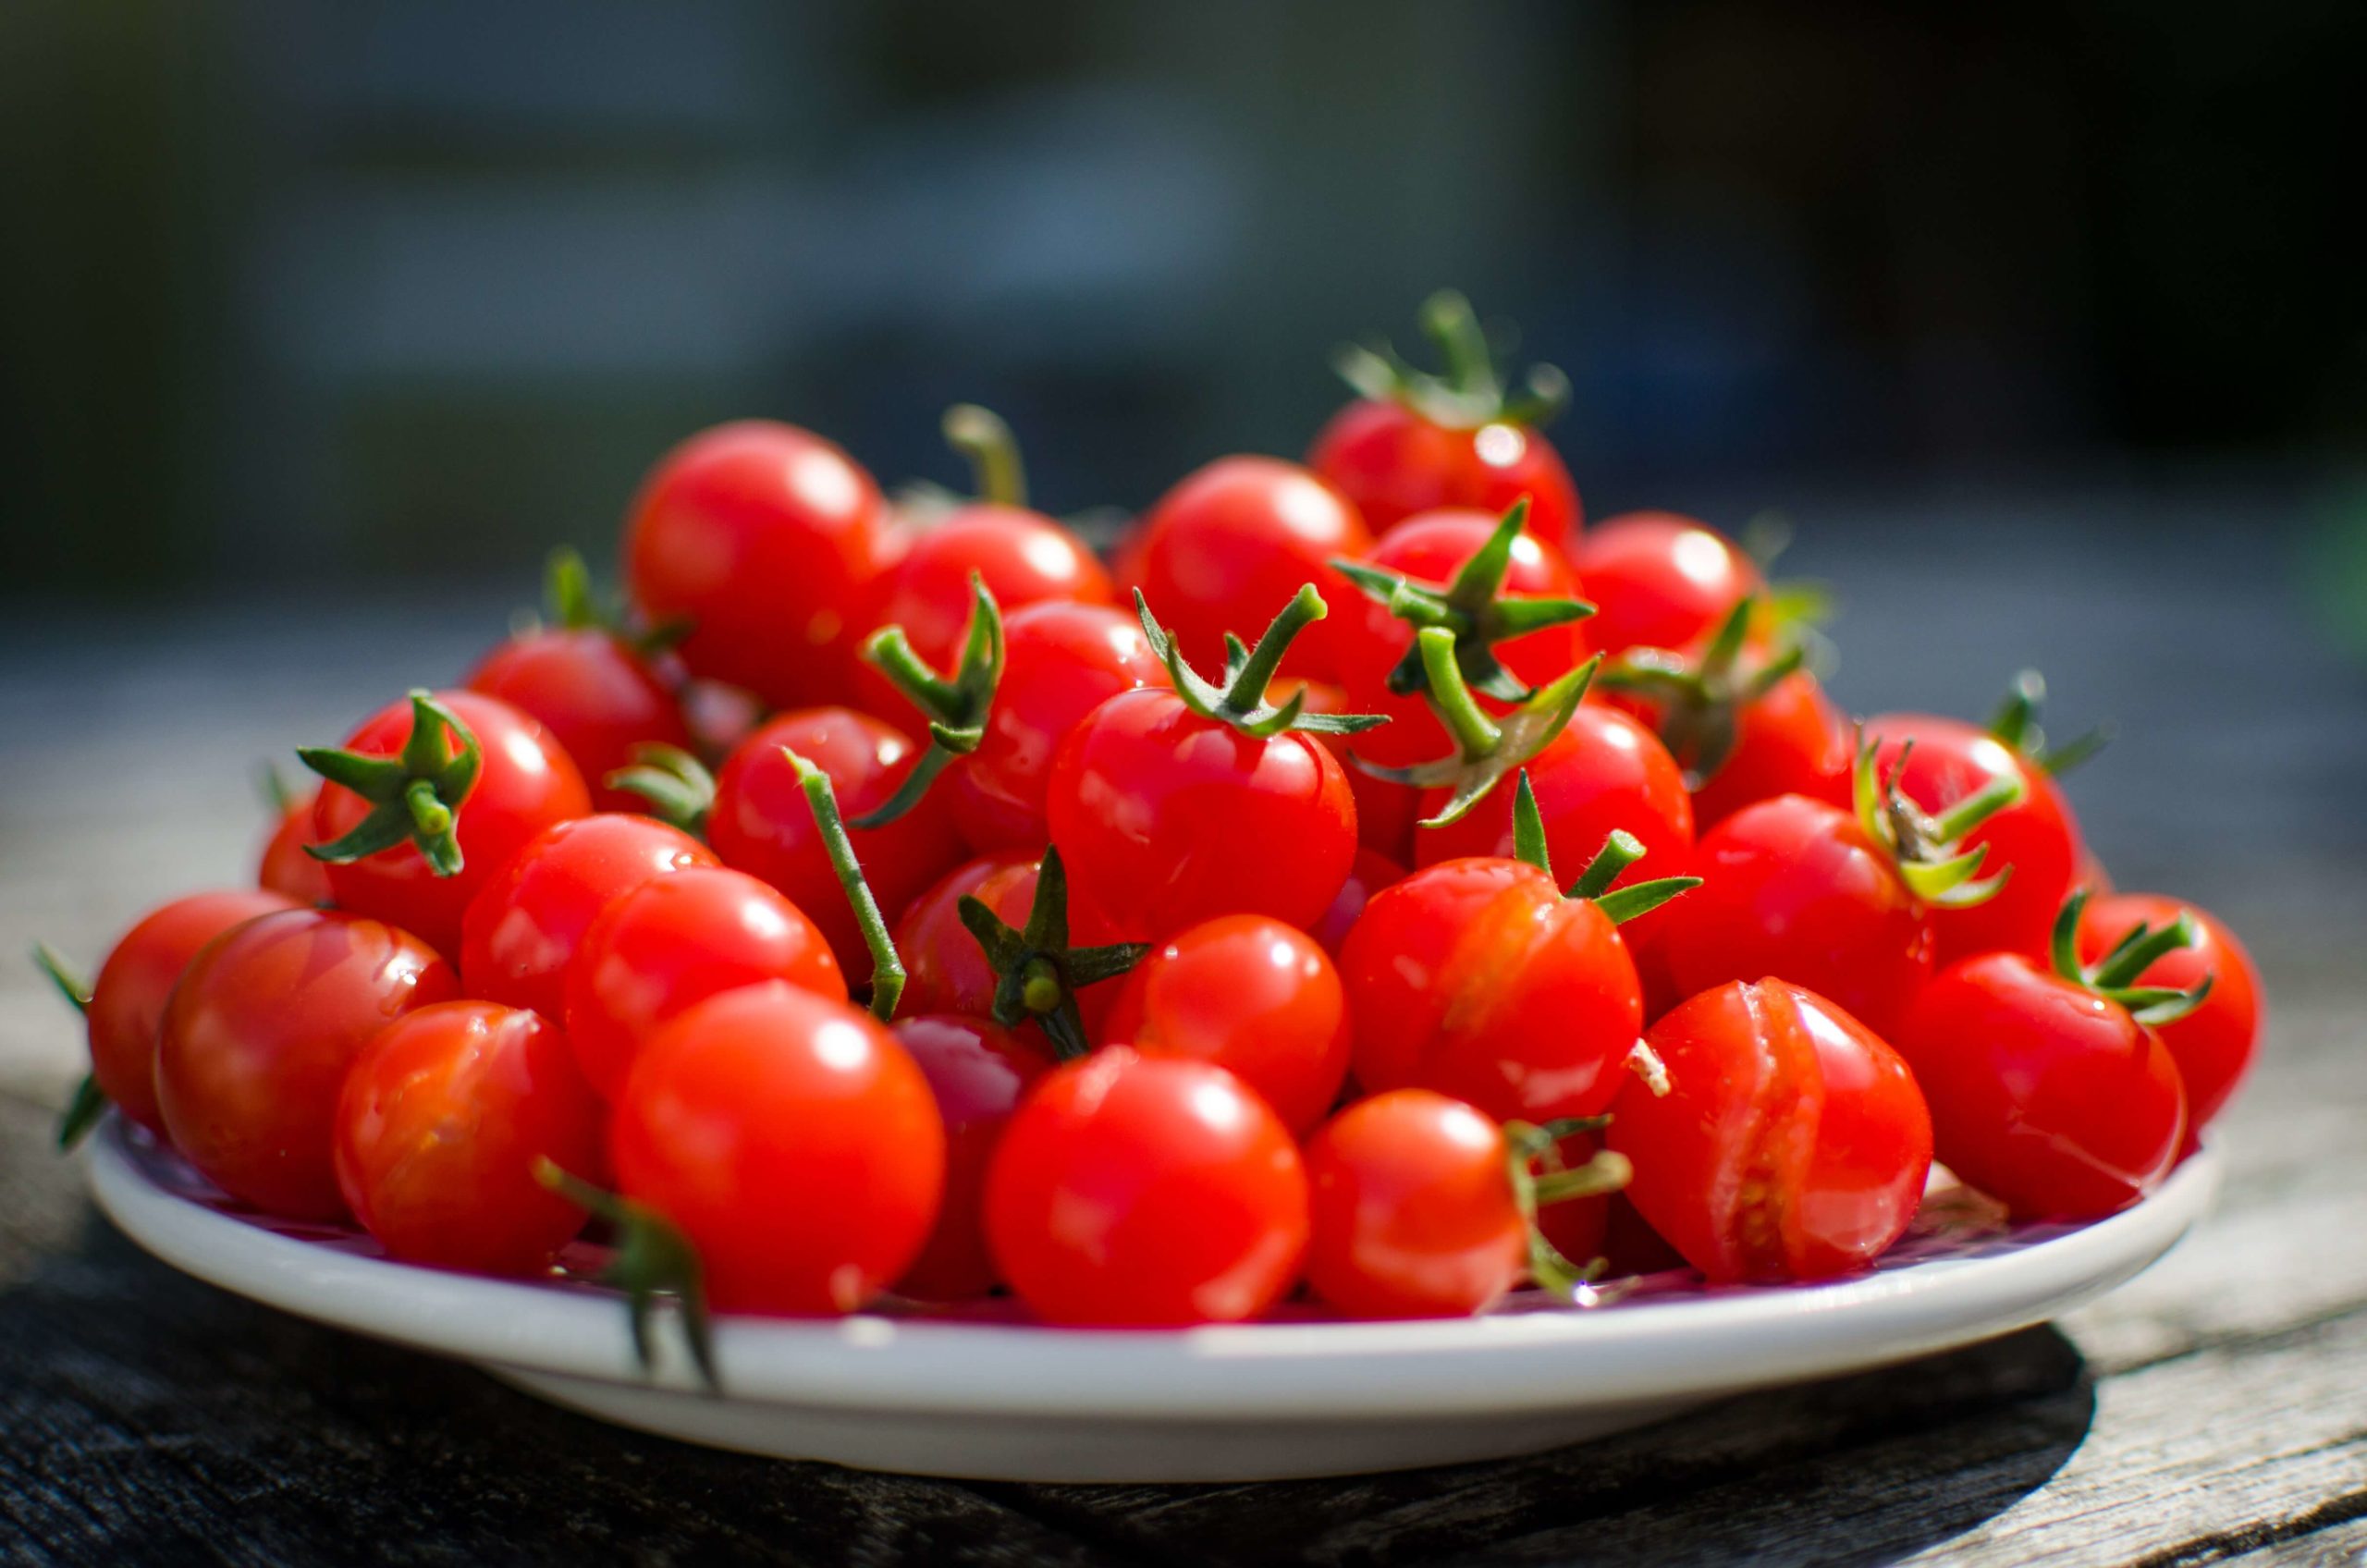 santorini cherry tomatoes | GreeceFoodies